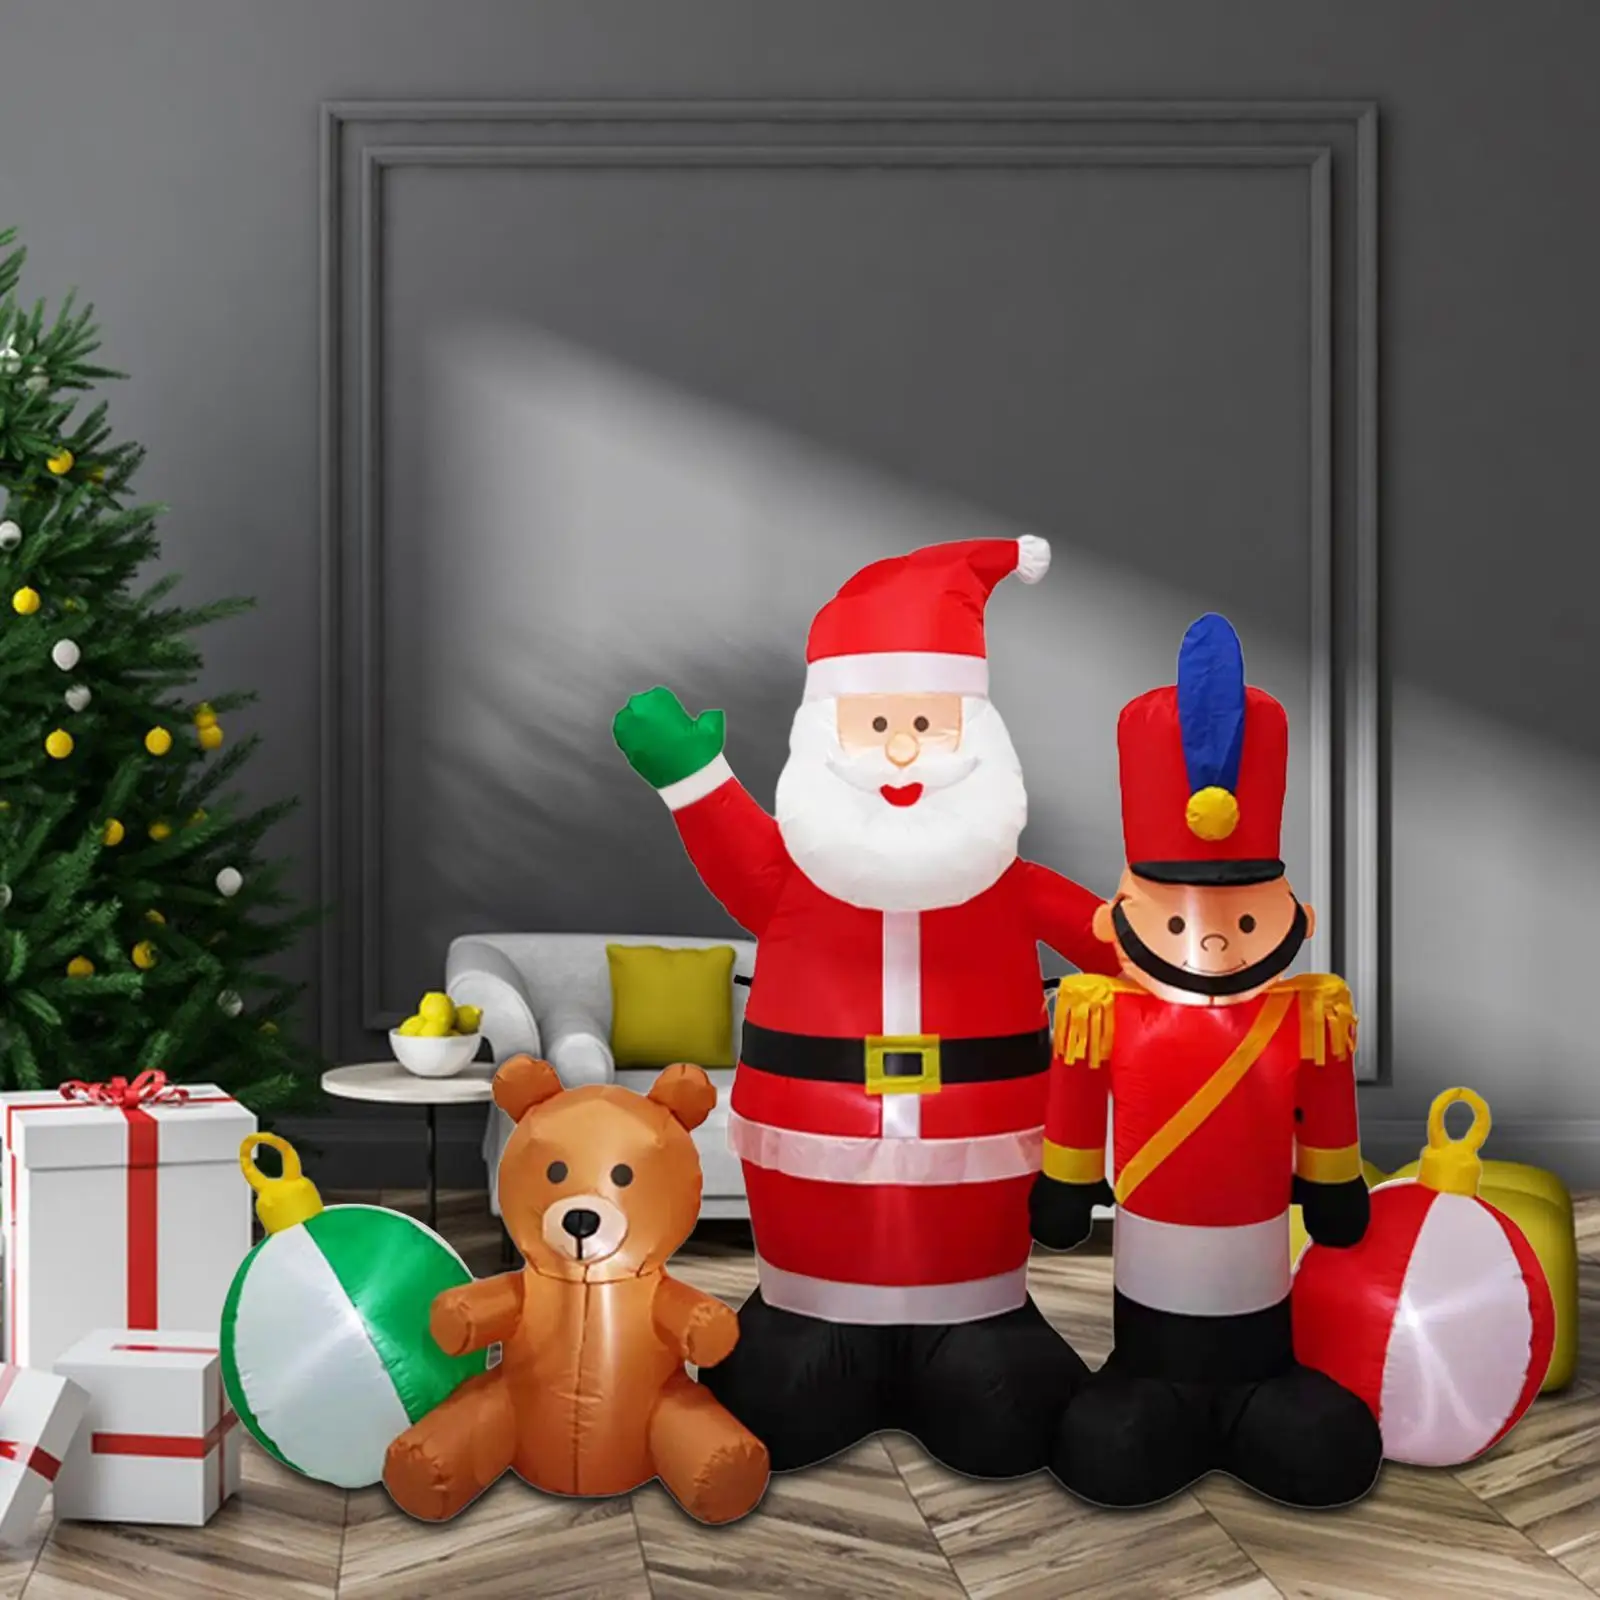 Christmas Santa Soldier Inflatable Decoration Outdoor US Plug Xmas Decor Ornaments for Garden, Terrace, Porch, Lawn